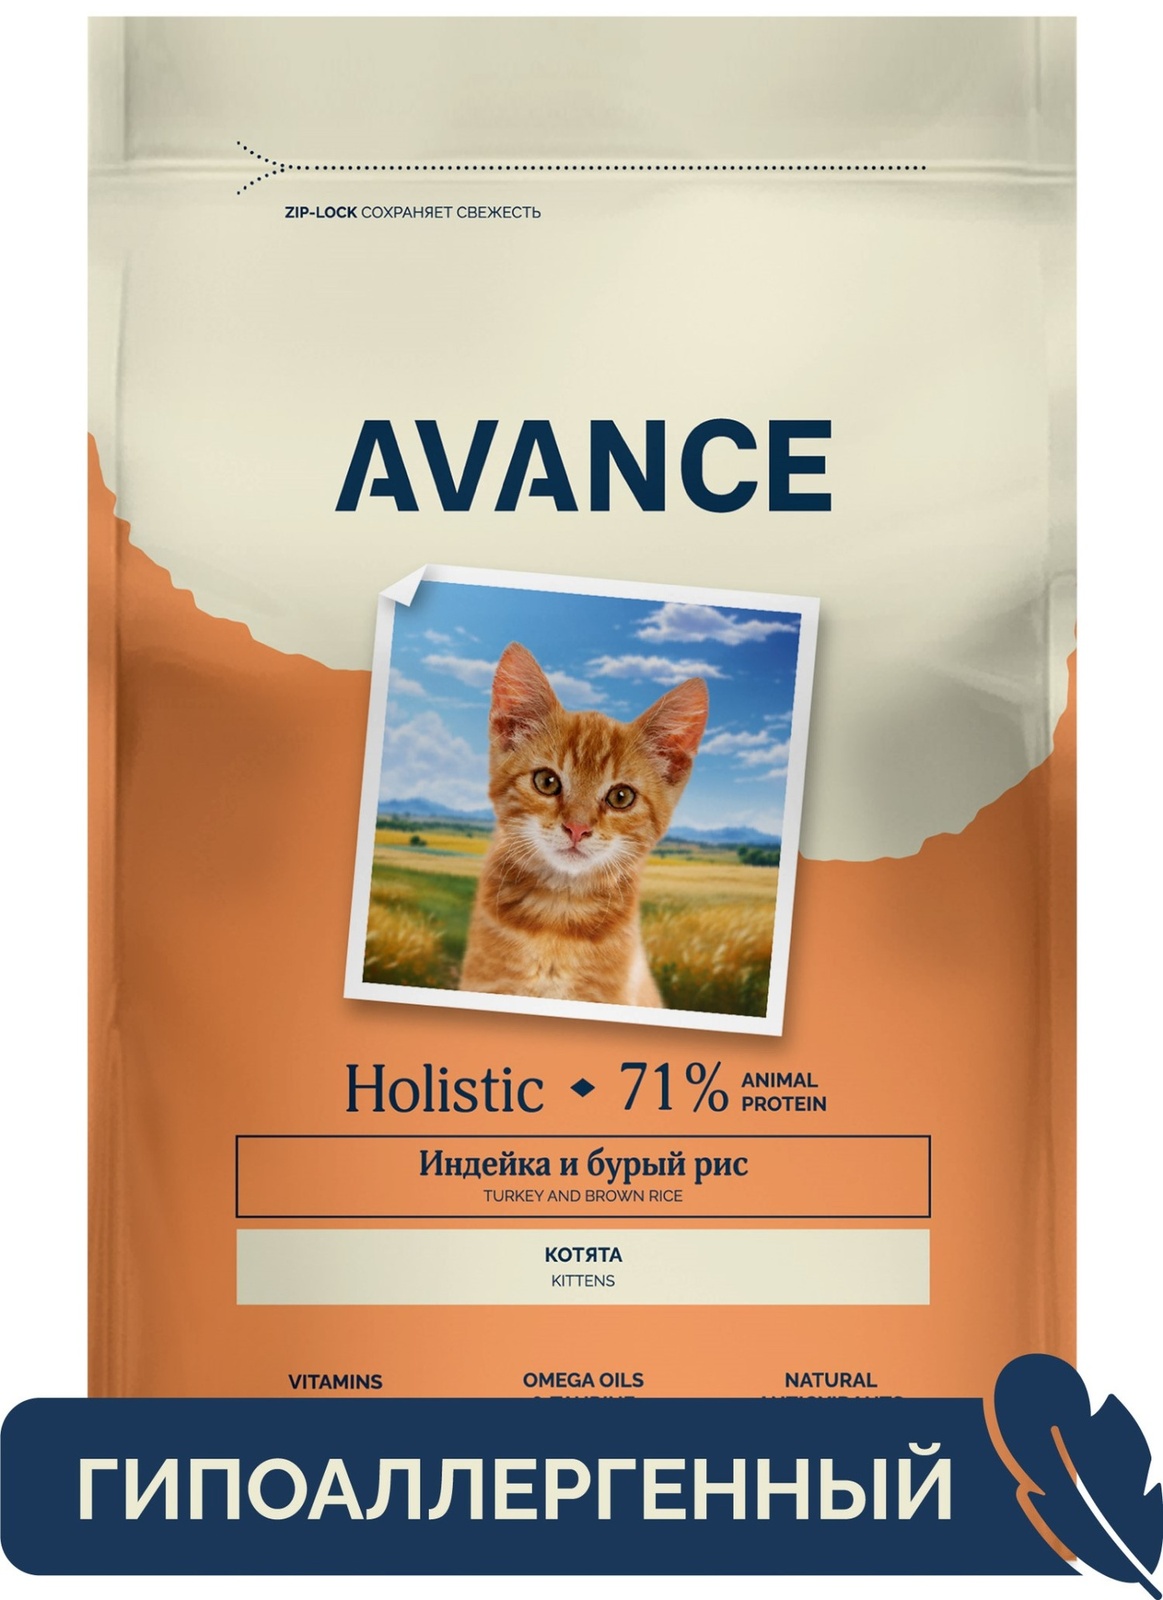 сухой корм avance для котят с индейкой и бурым рисом AVANCE holistic AVANCE holistic полнорационный сухой корм для котят с индейкой и бурым рисом (400 г)